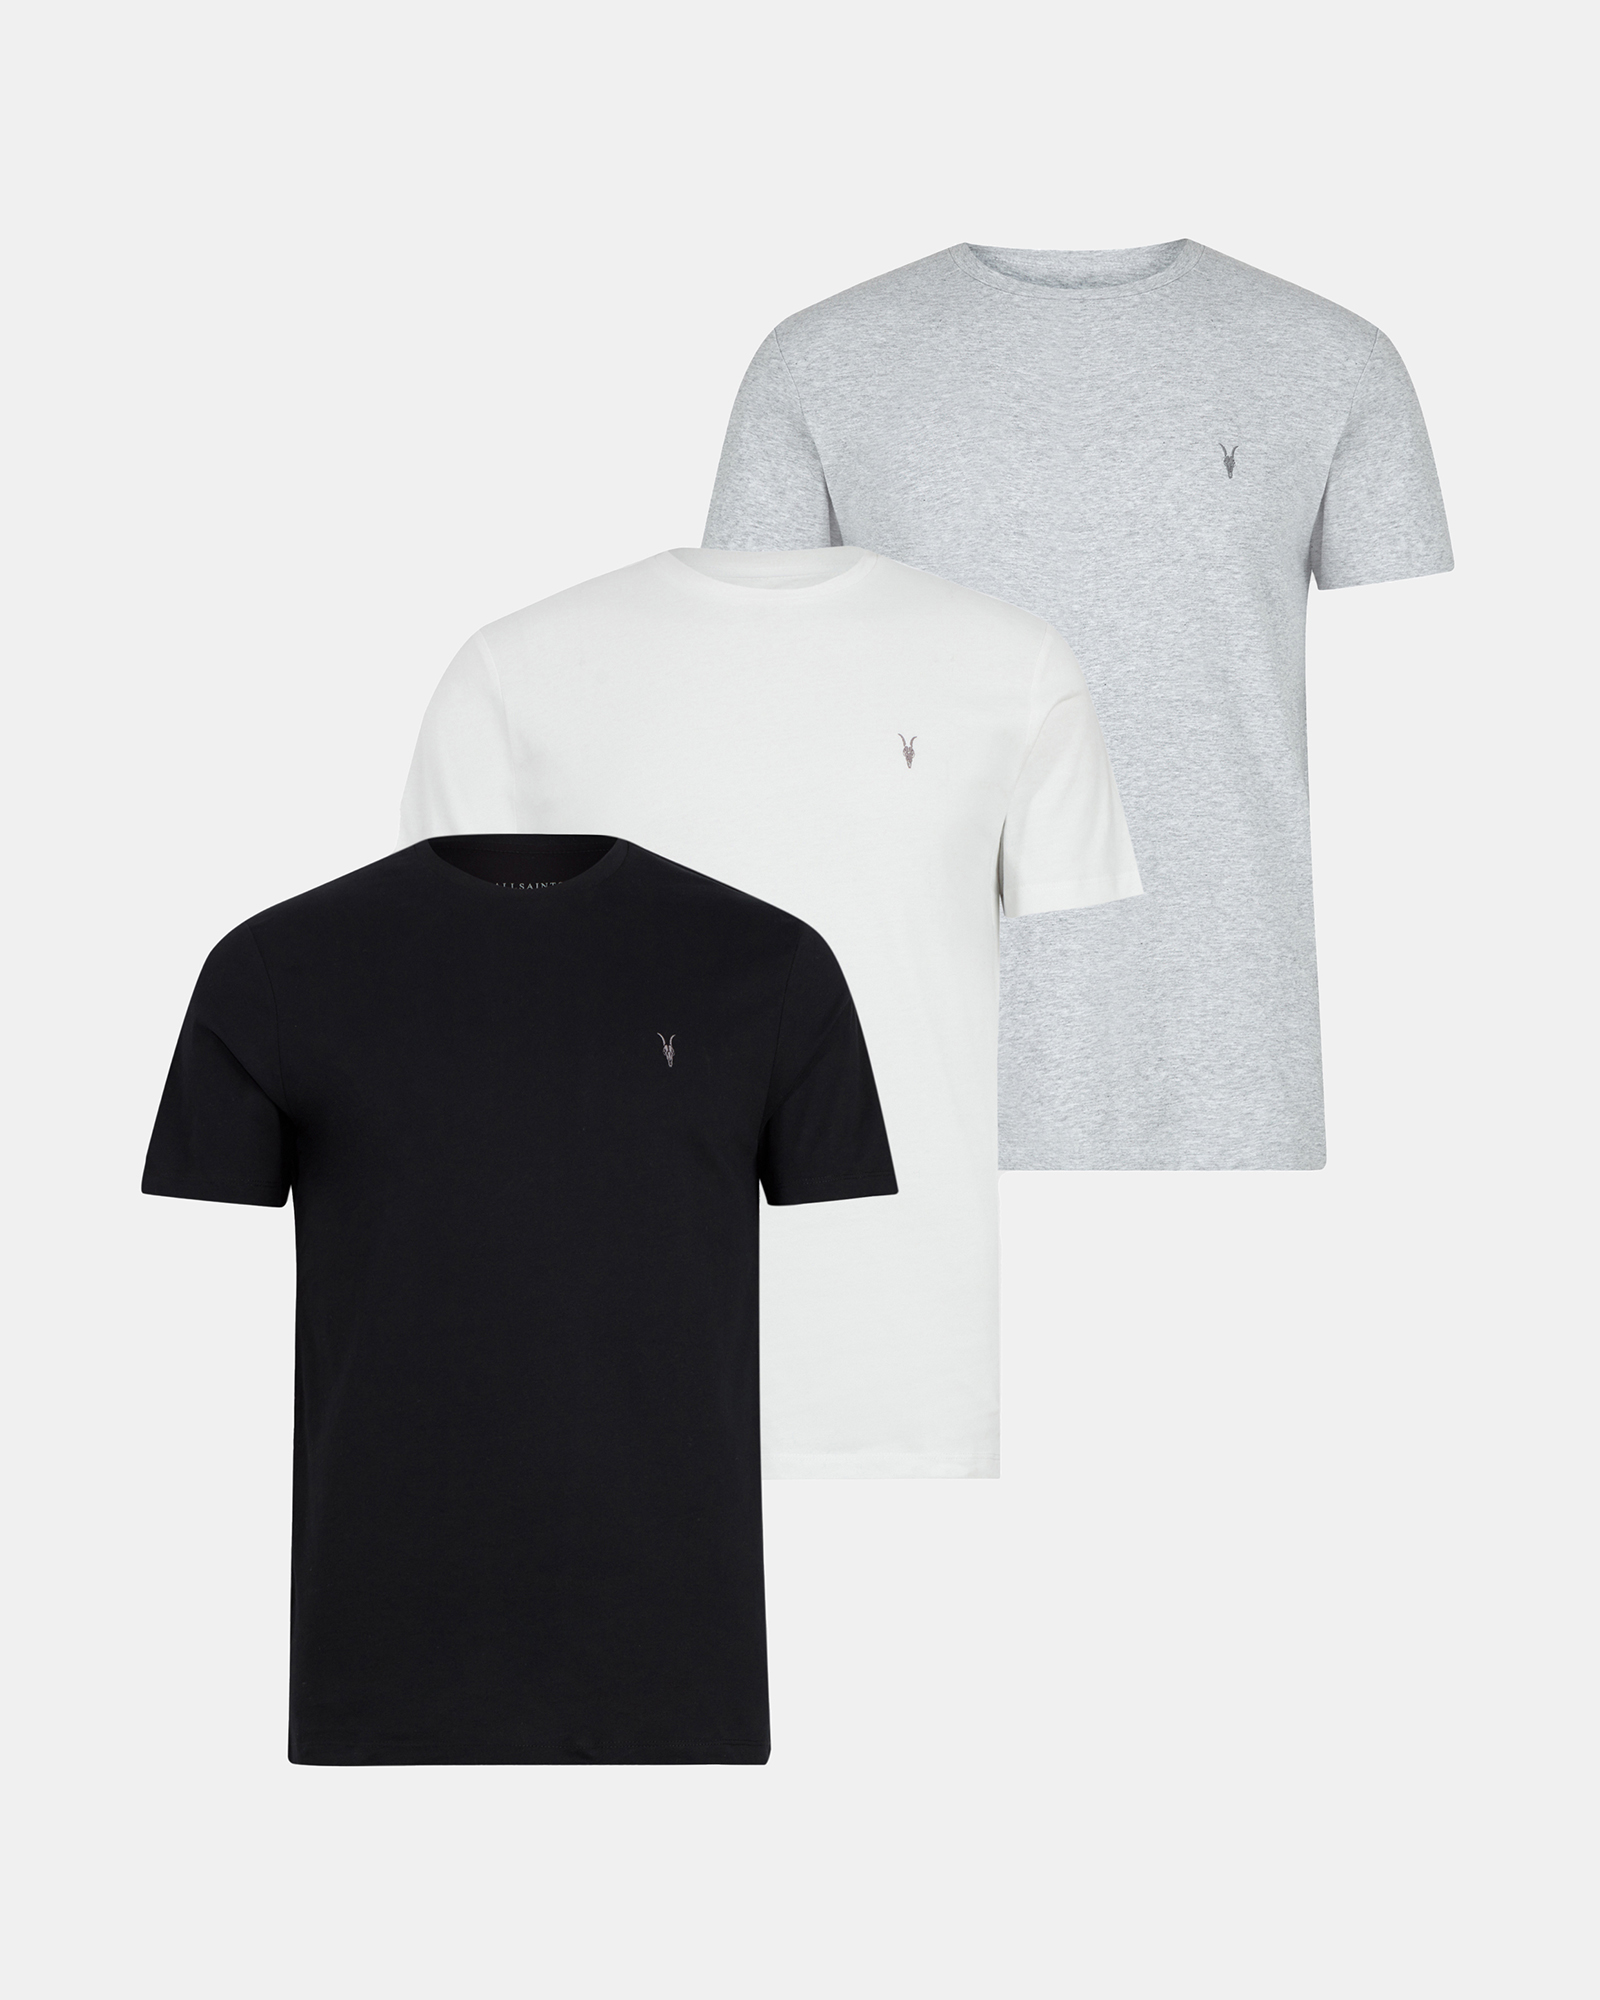 AllSaints Tonic Crew Ramskull T-Shirts 3 Pack,, White